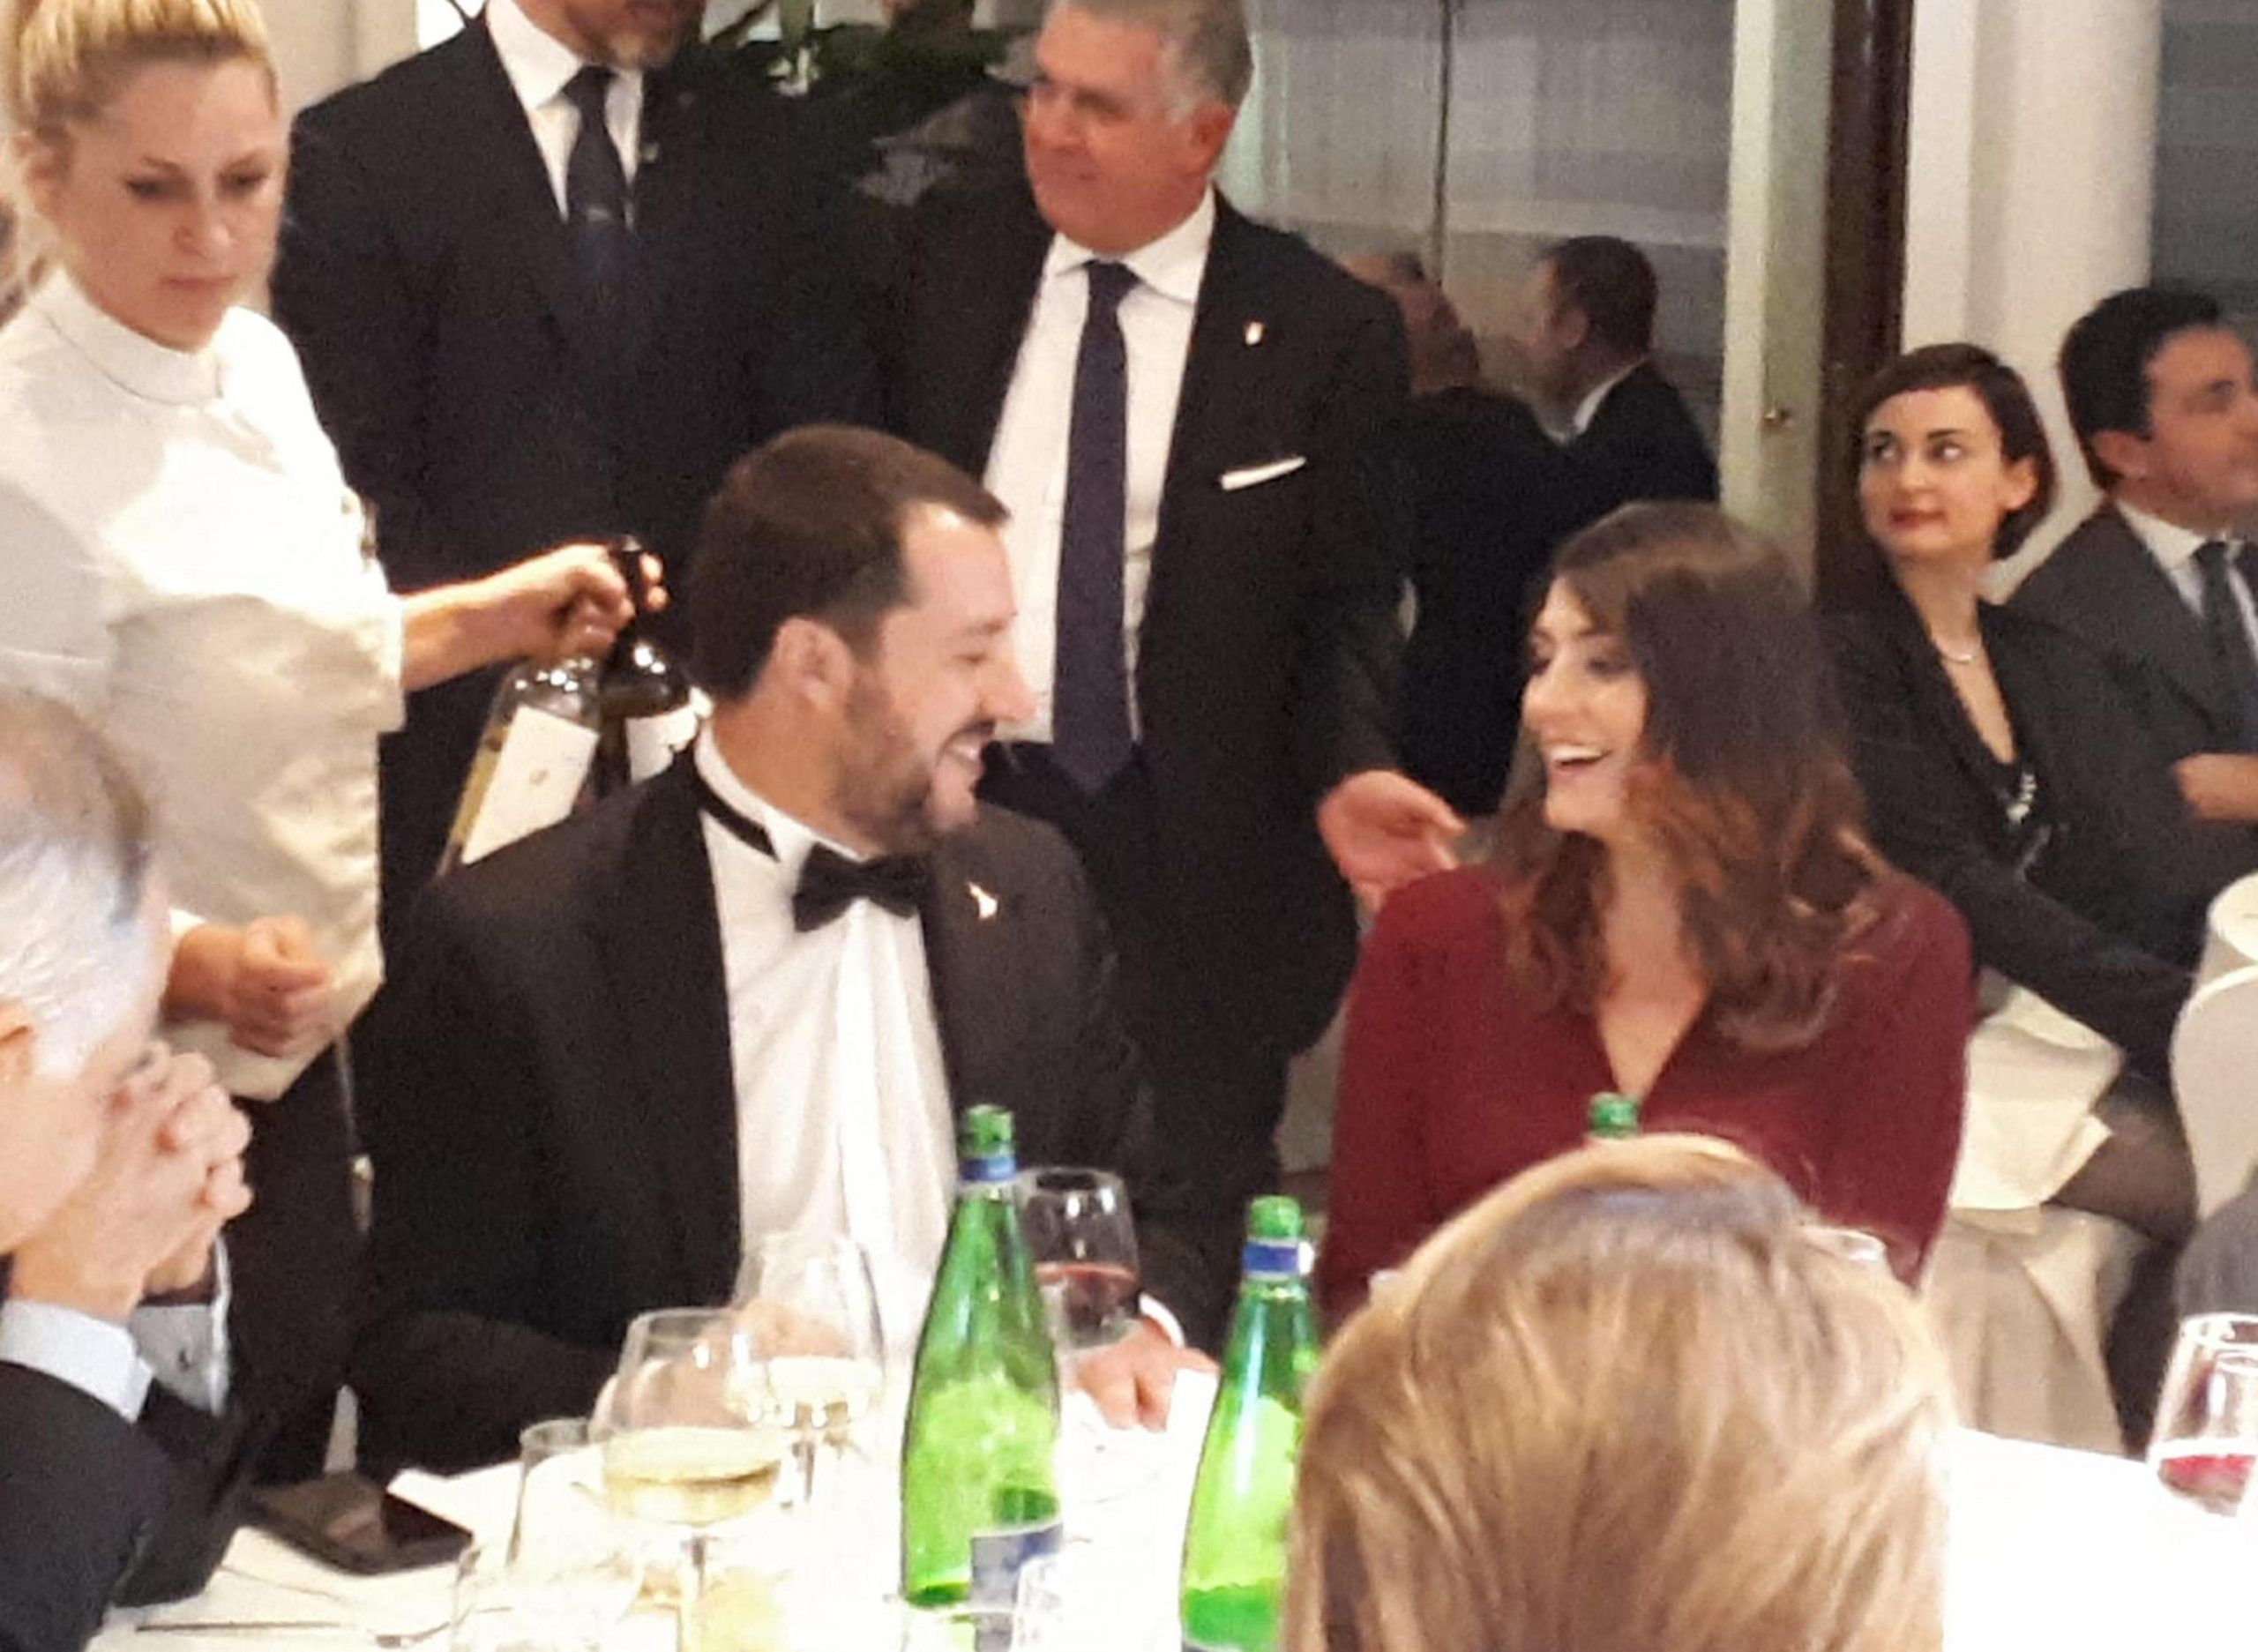 Elisa Isoardi e Matteo Salvini di nuovo insieme per una cena di gala